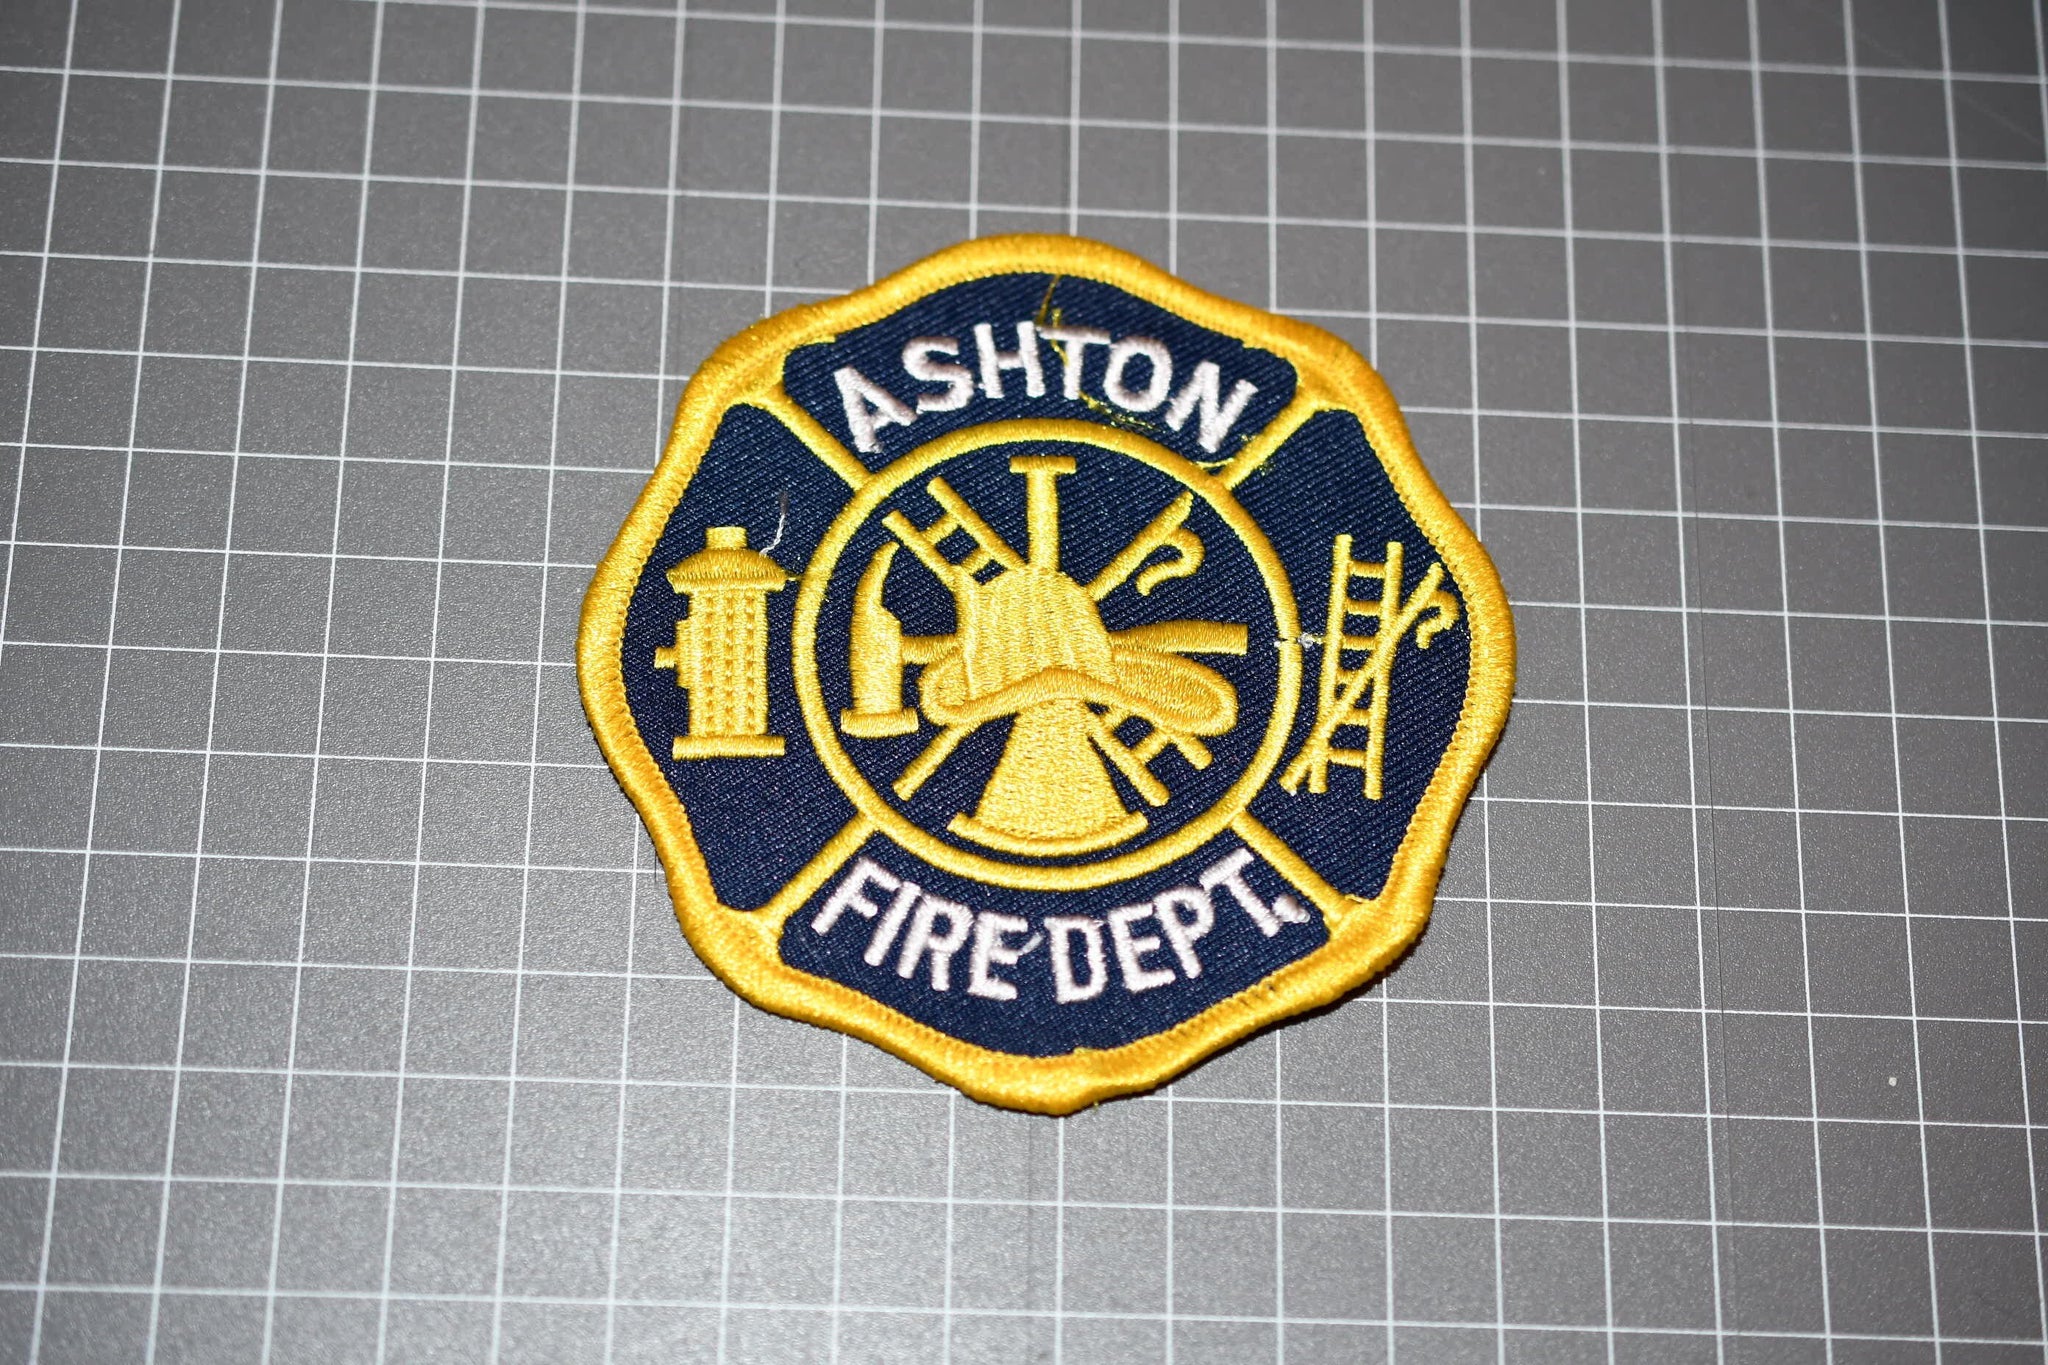 Ashton Illinois Fire Department Patch (B3)